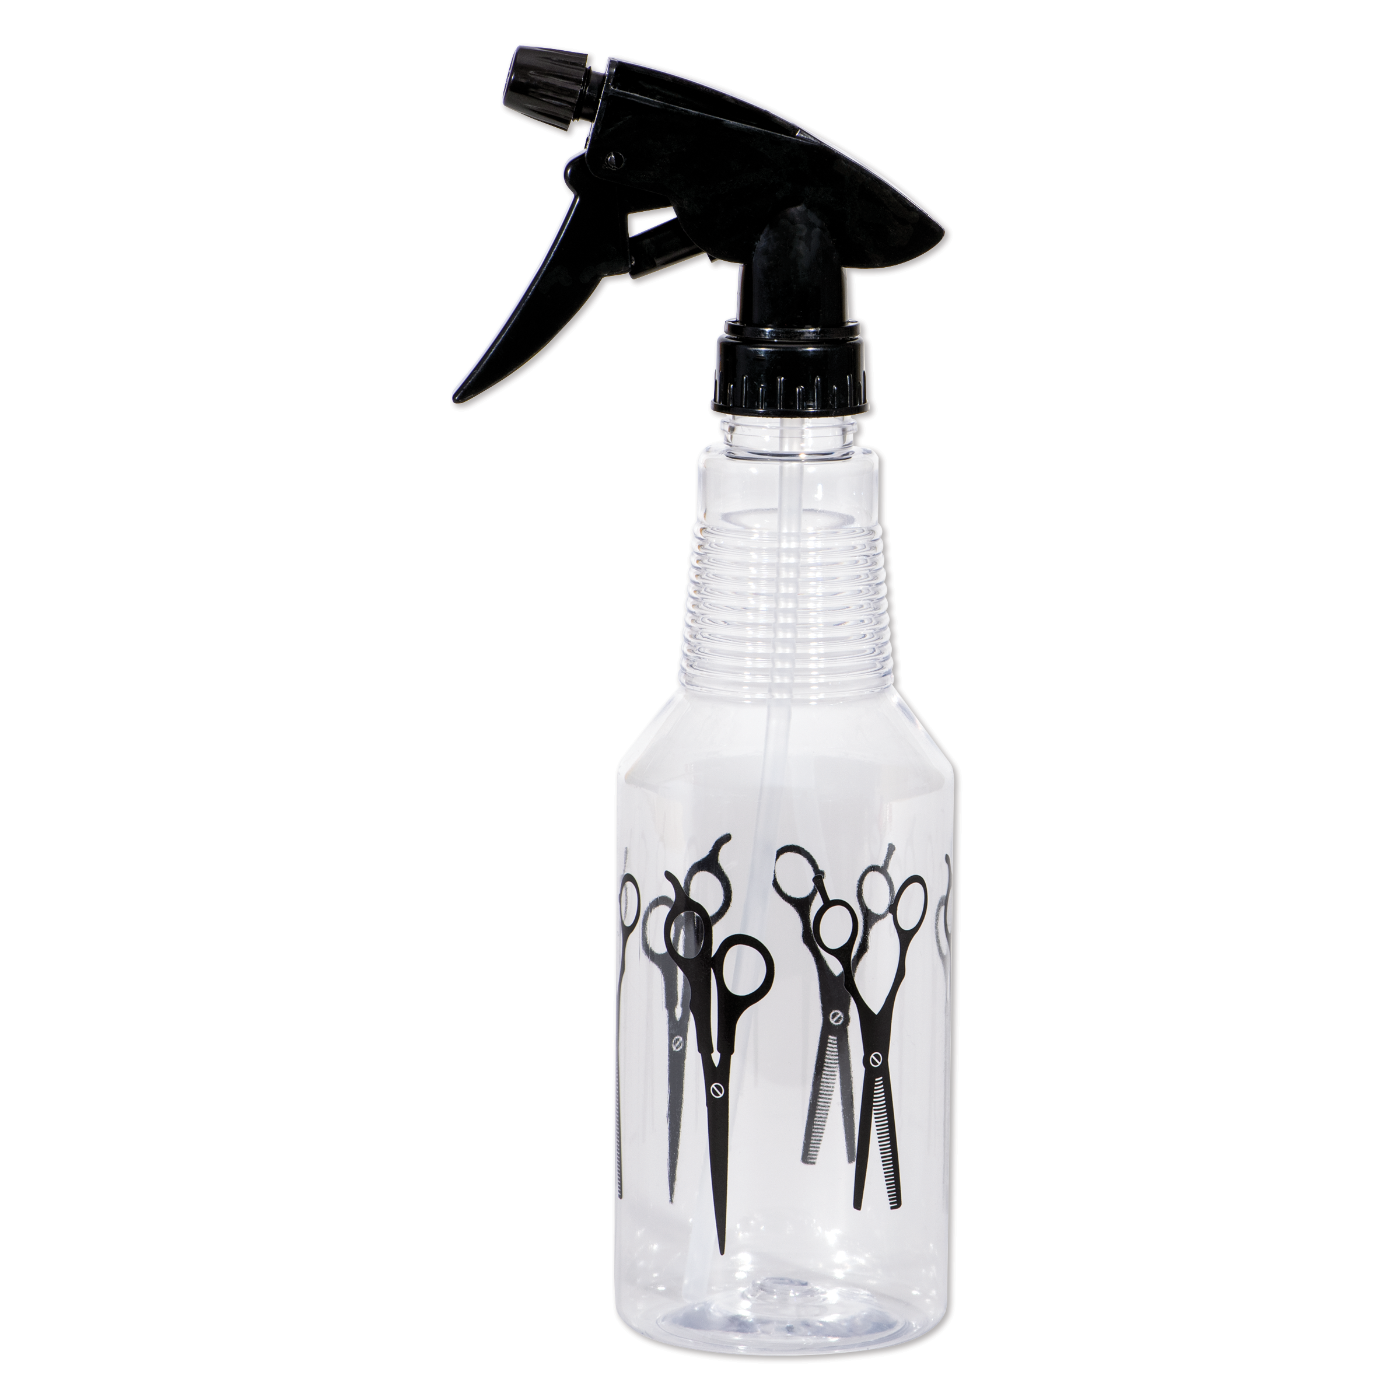 SOFT 'N STYLE Design Spray Bottle 16OZ B43